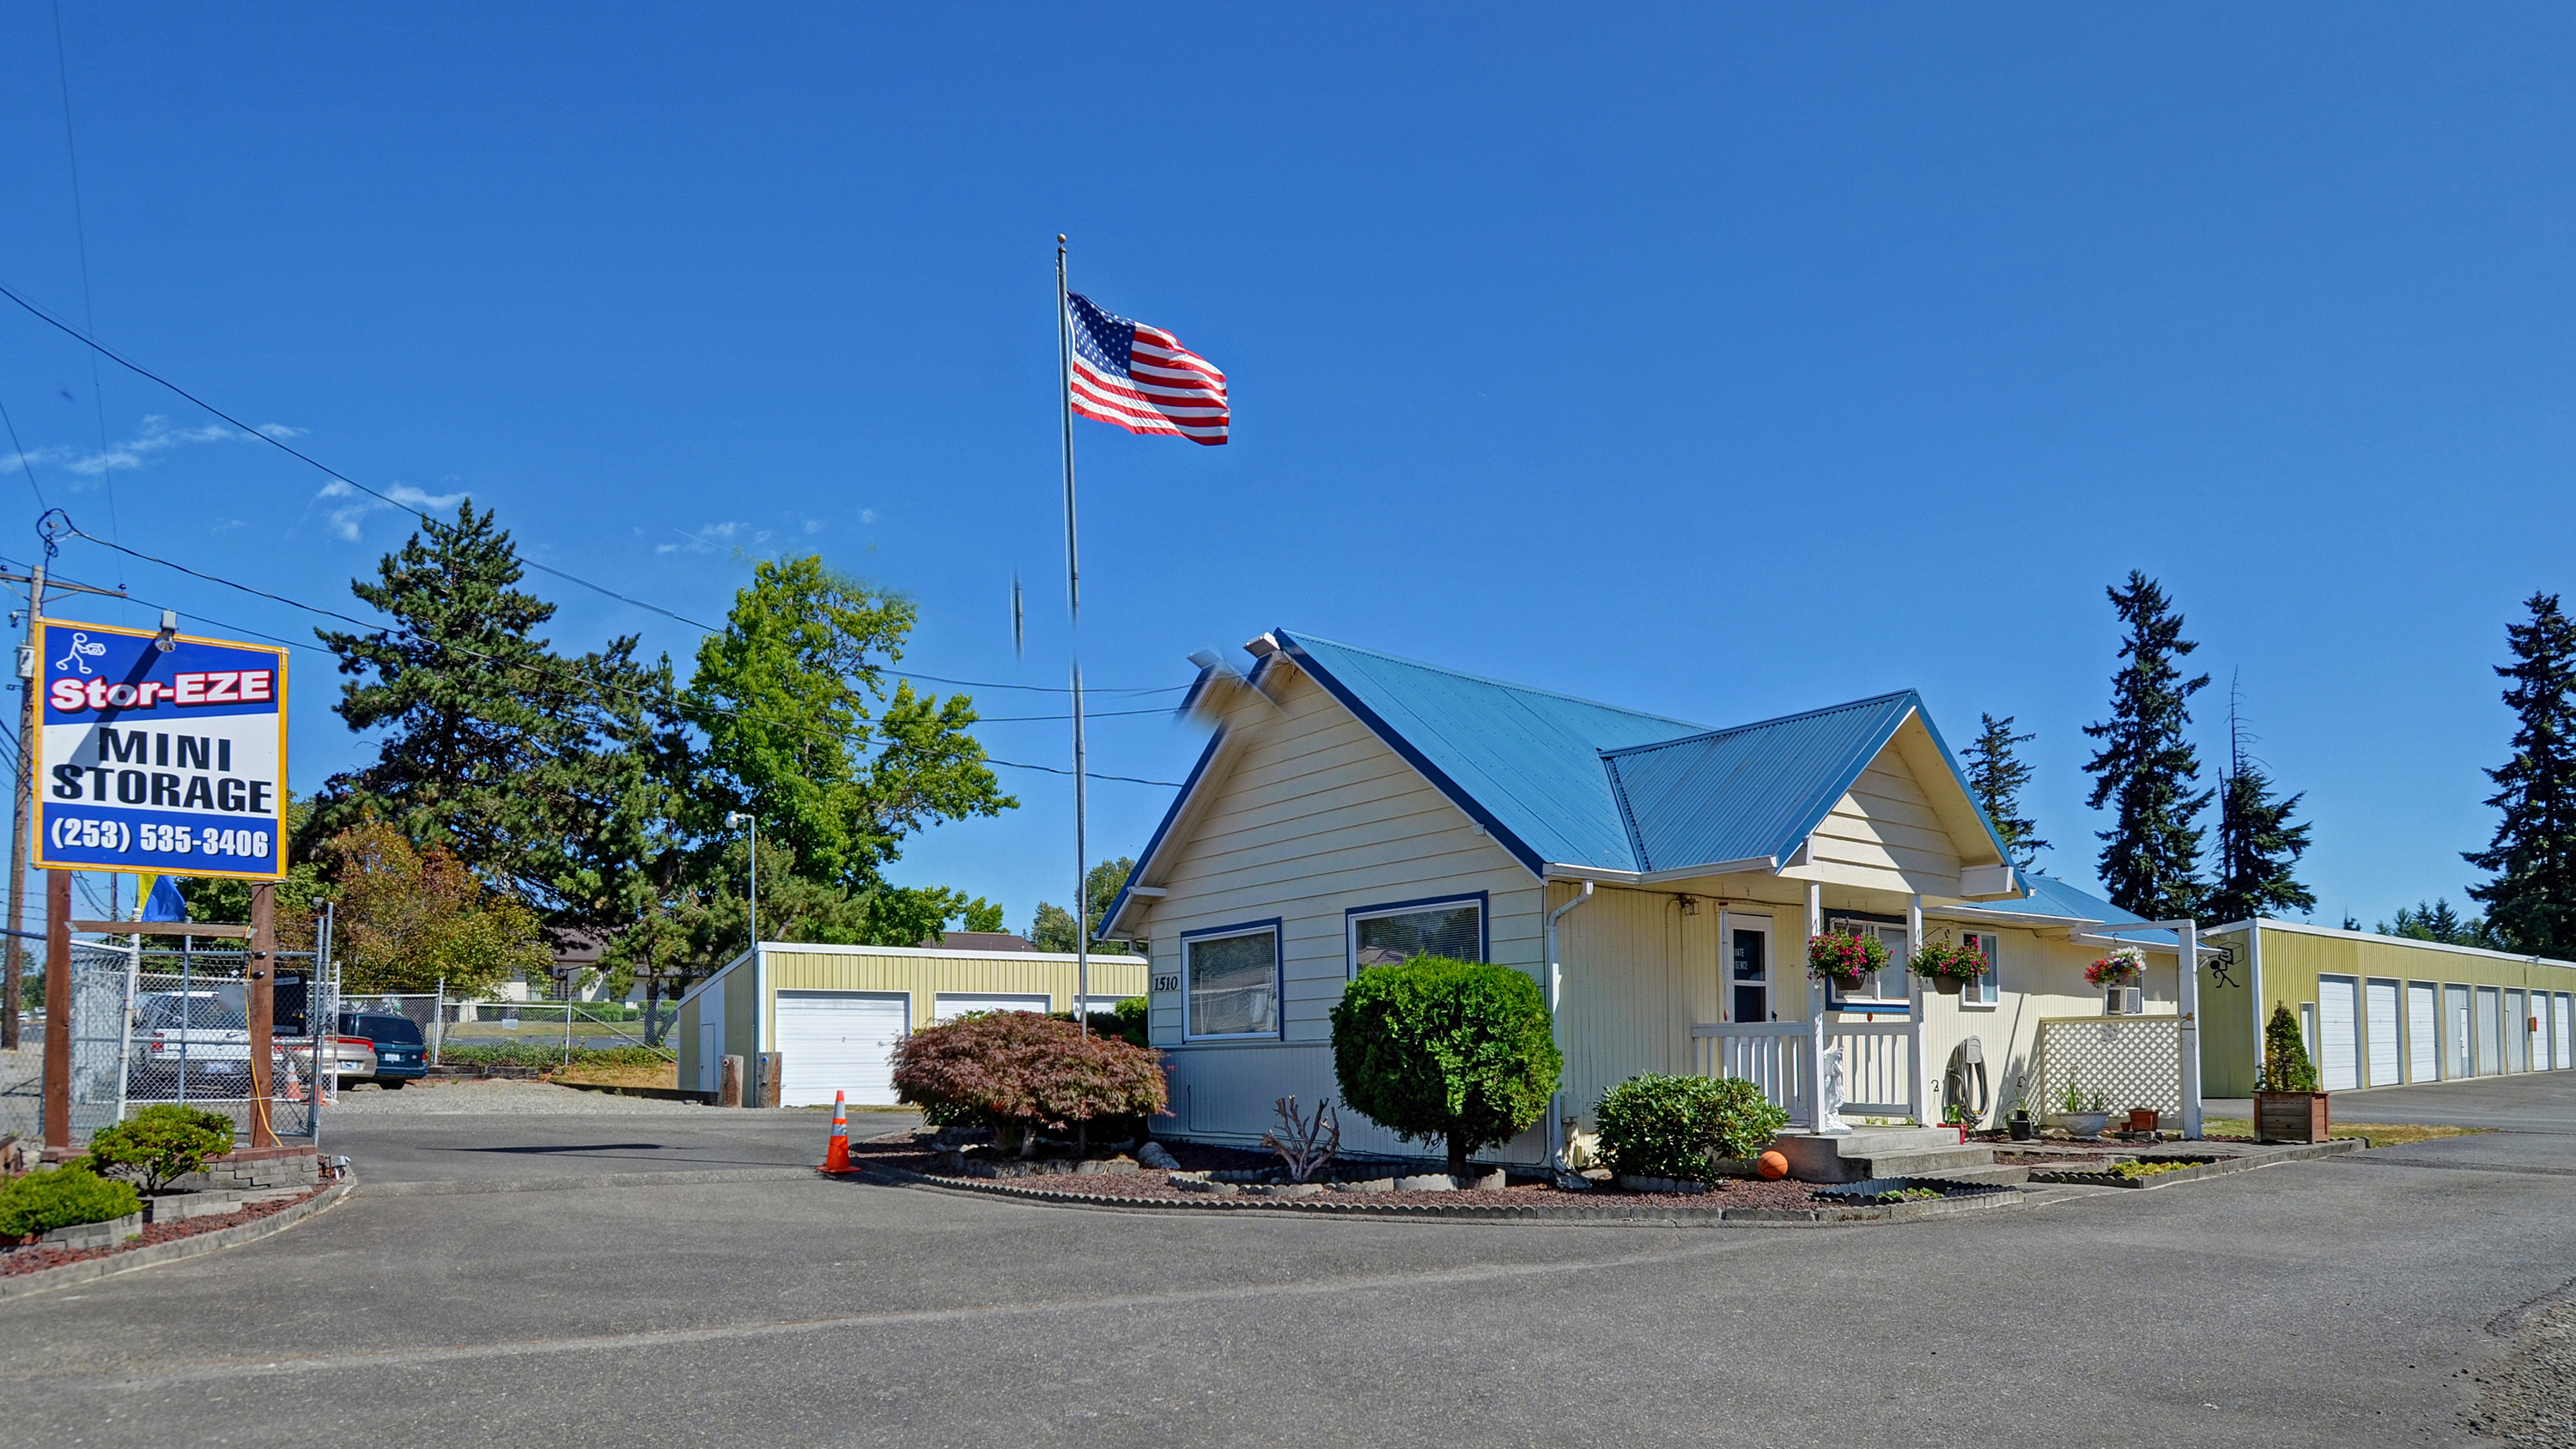 Stor-Eze Self Storage Office in Tacoma, WA